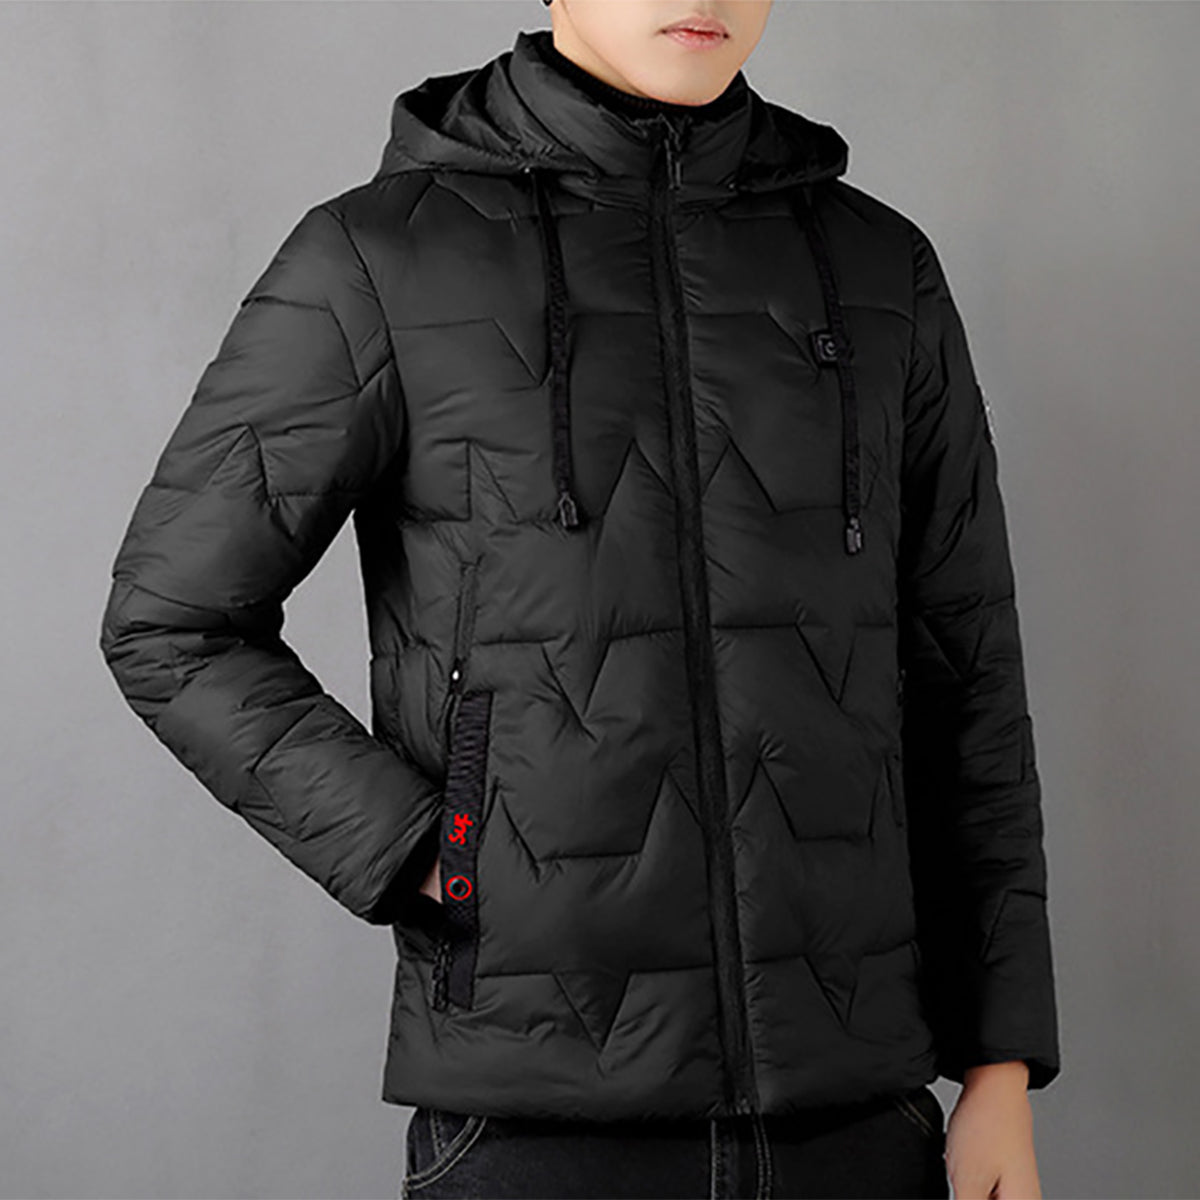 Black USB Electric Heated Coats Heating Hooded Jacket Long Sleeves Winter Warm Clothing